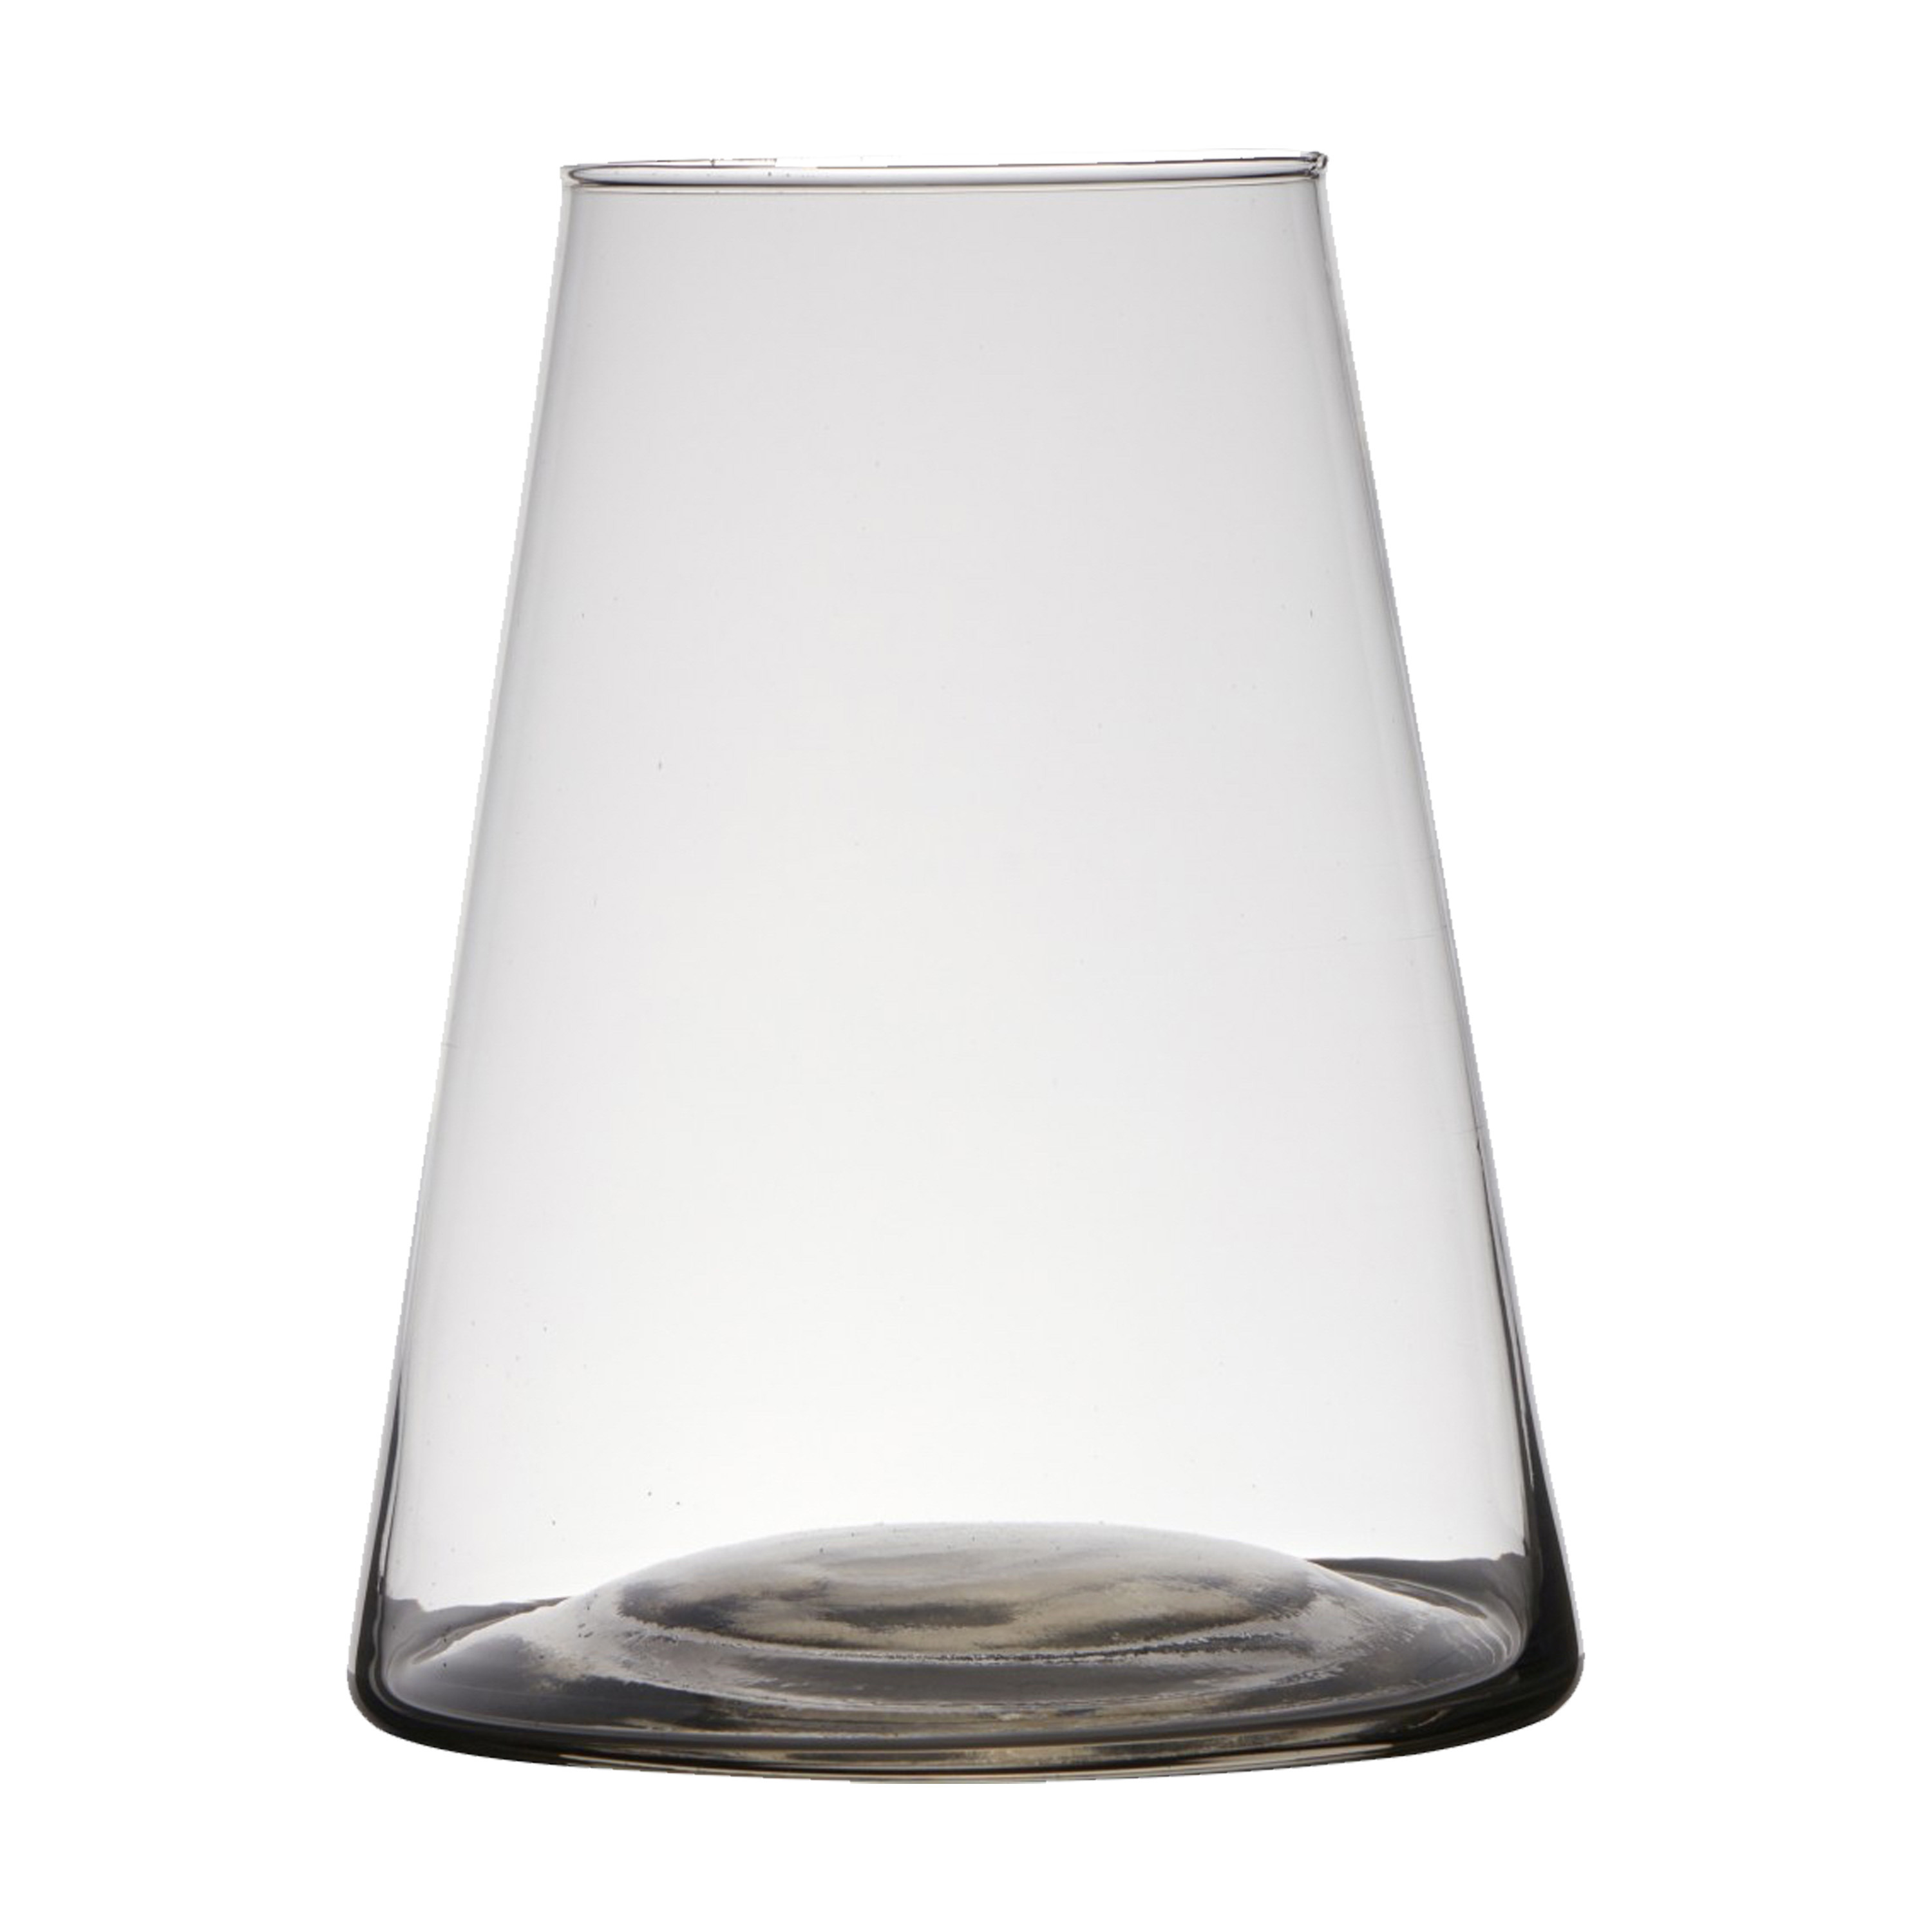 Hakbijl Glass Bloemenvaas Donna transparant eco glas D17 x H30 cm home-basics vaas